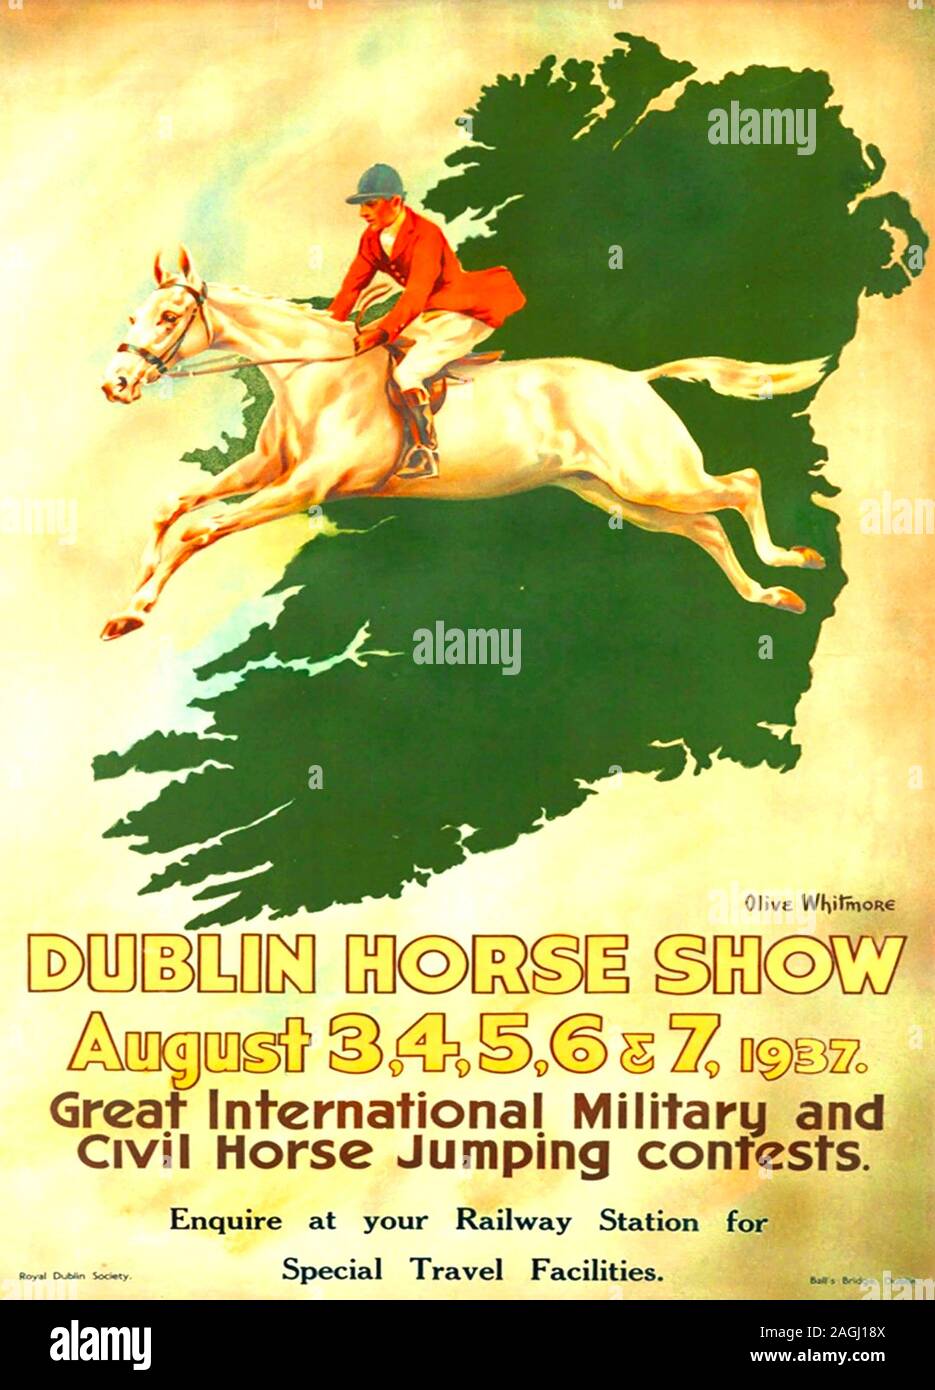 DUBLIN HORSE SHOW POSTER 1937 Foto Stock